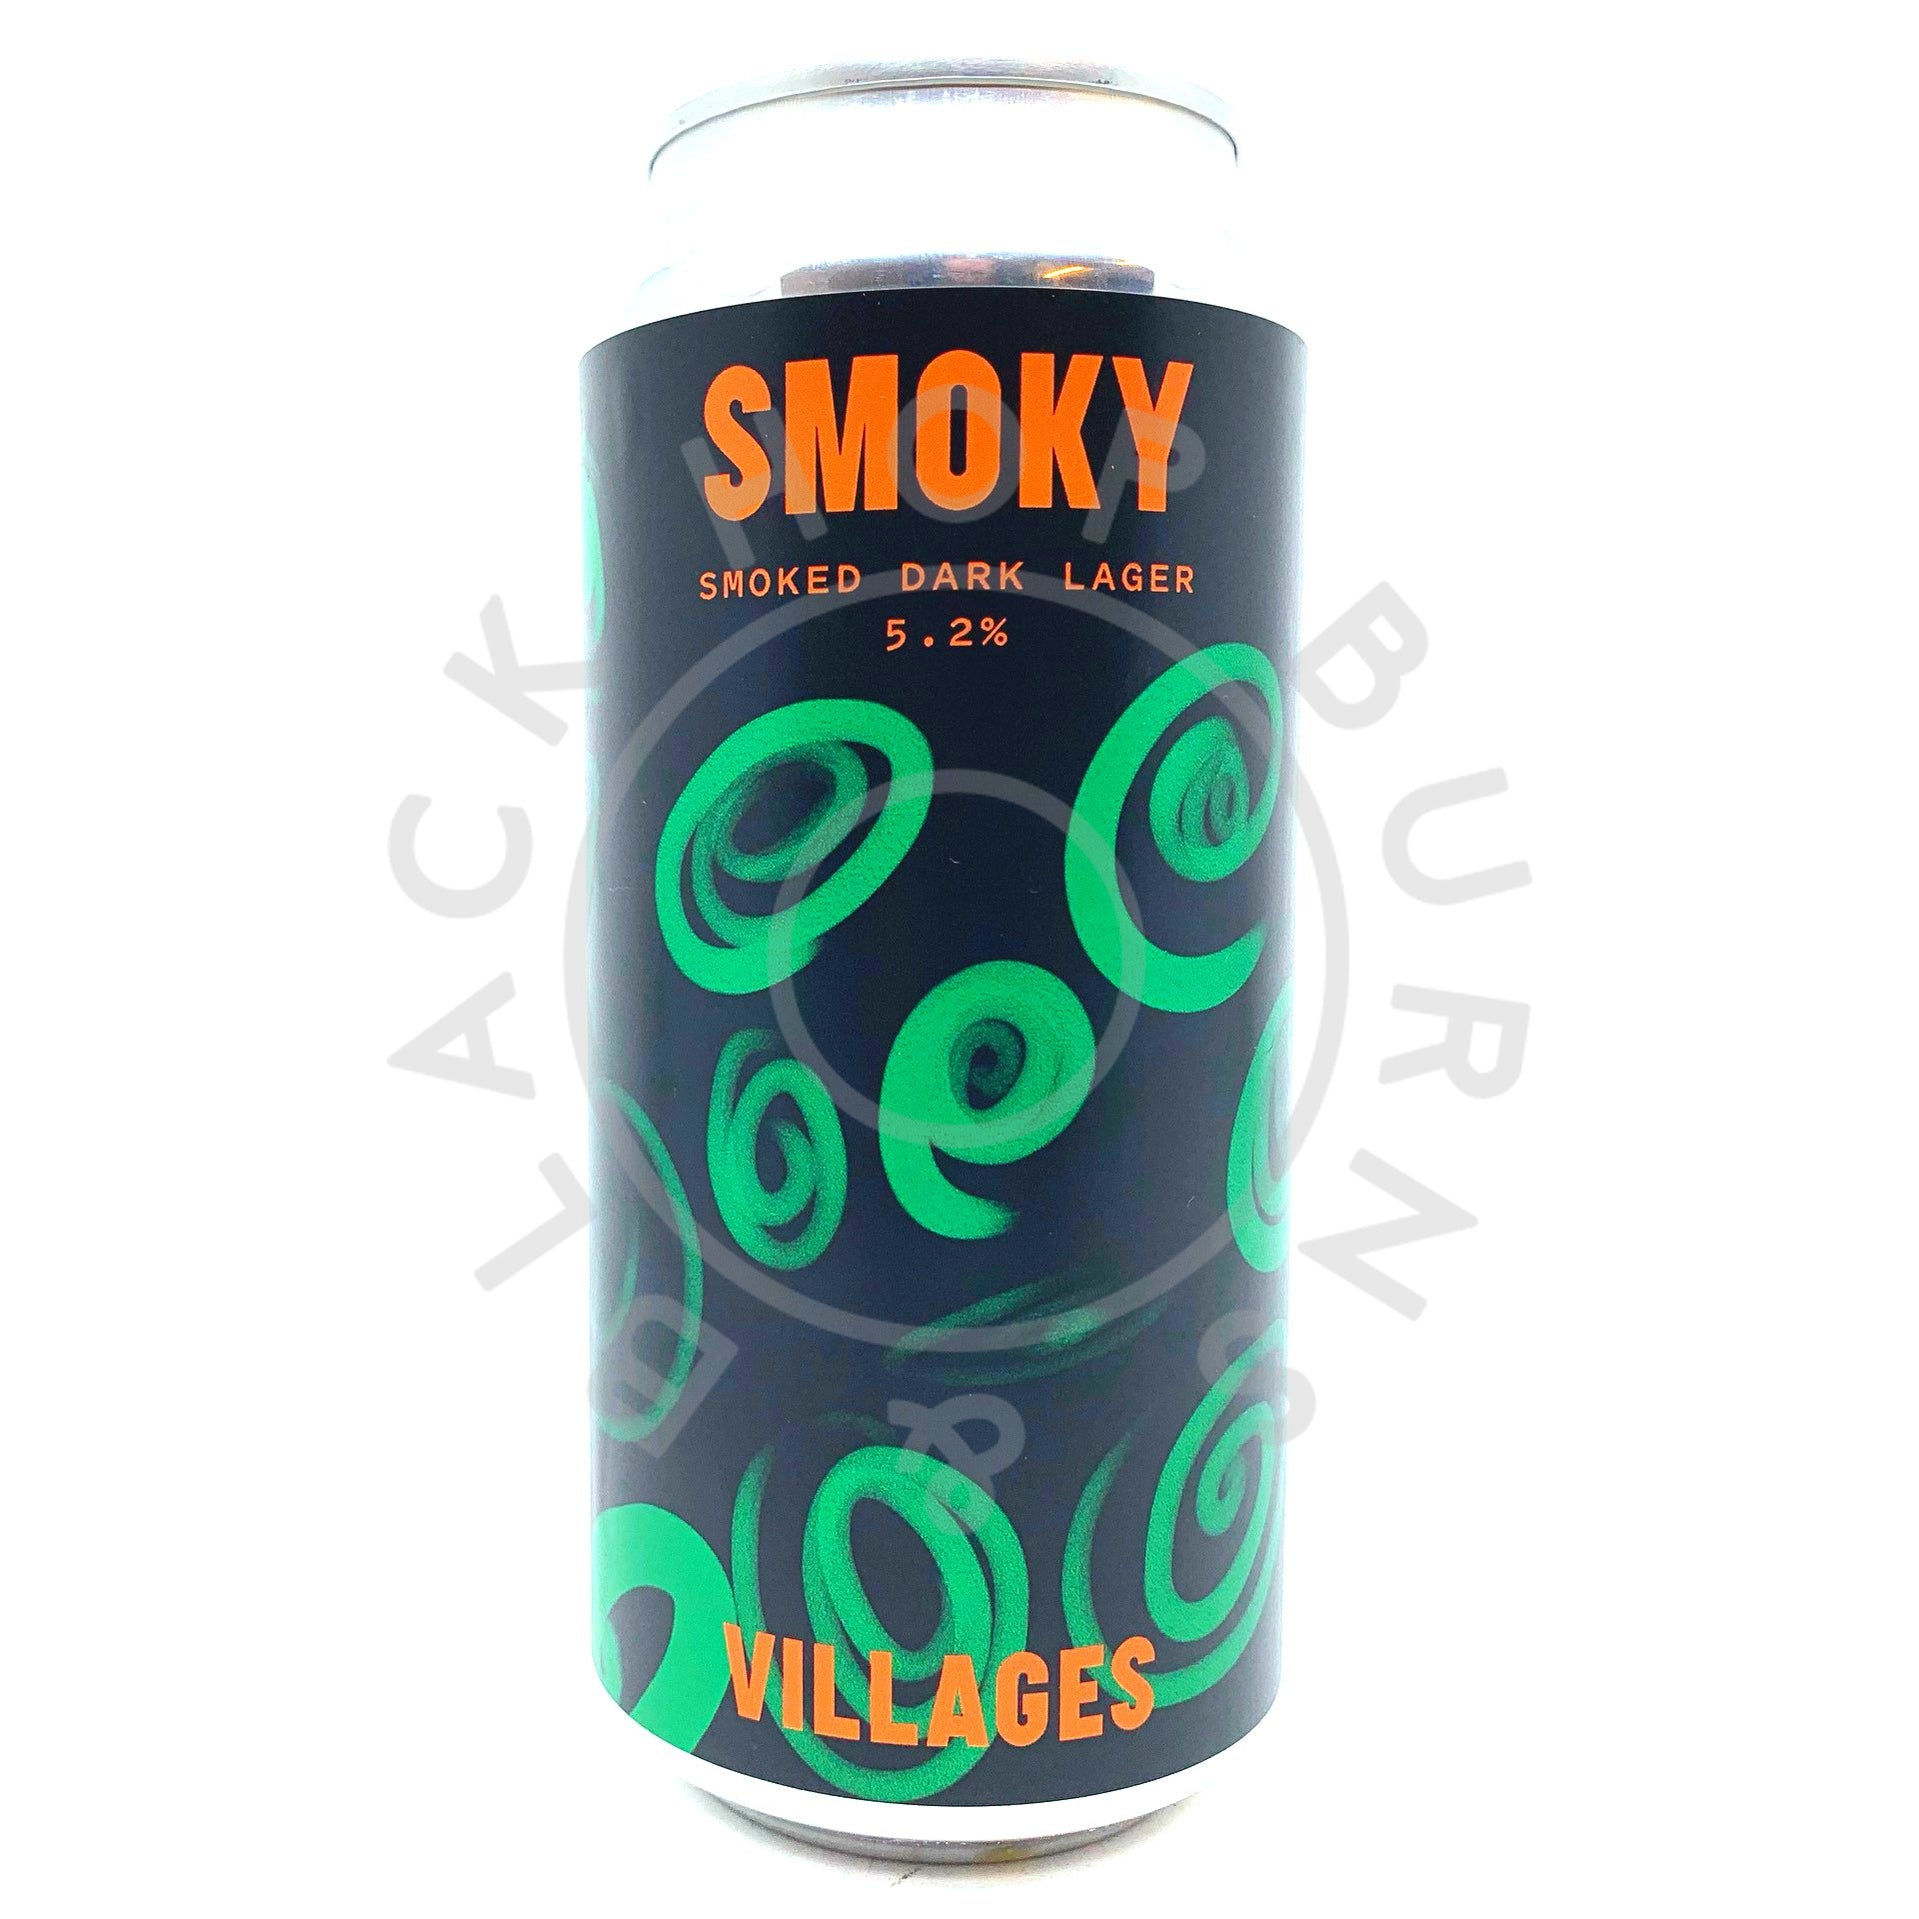 Villages Smoky Smoked Dark Lager 5.2% (440ml can)-Hop Burns & Black